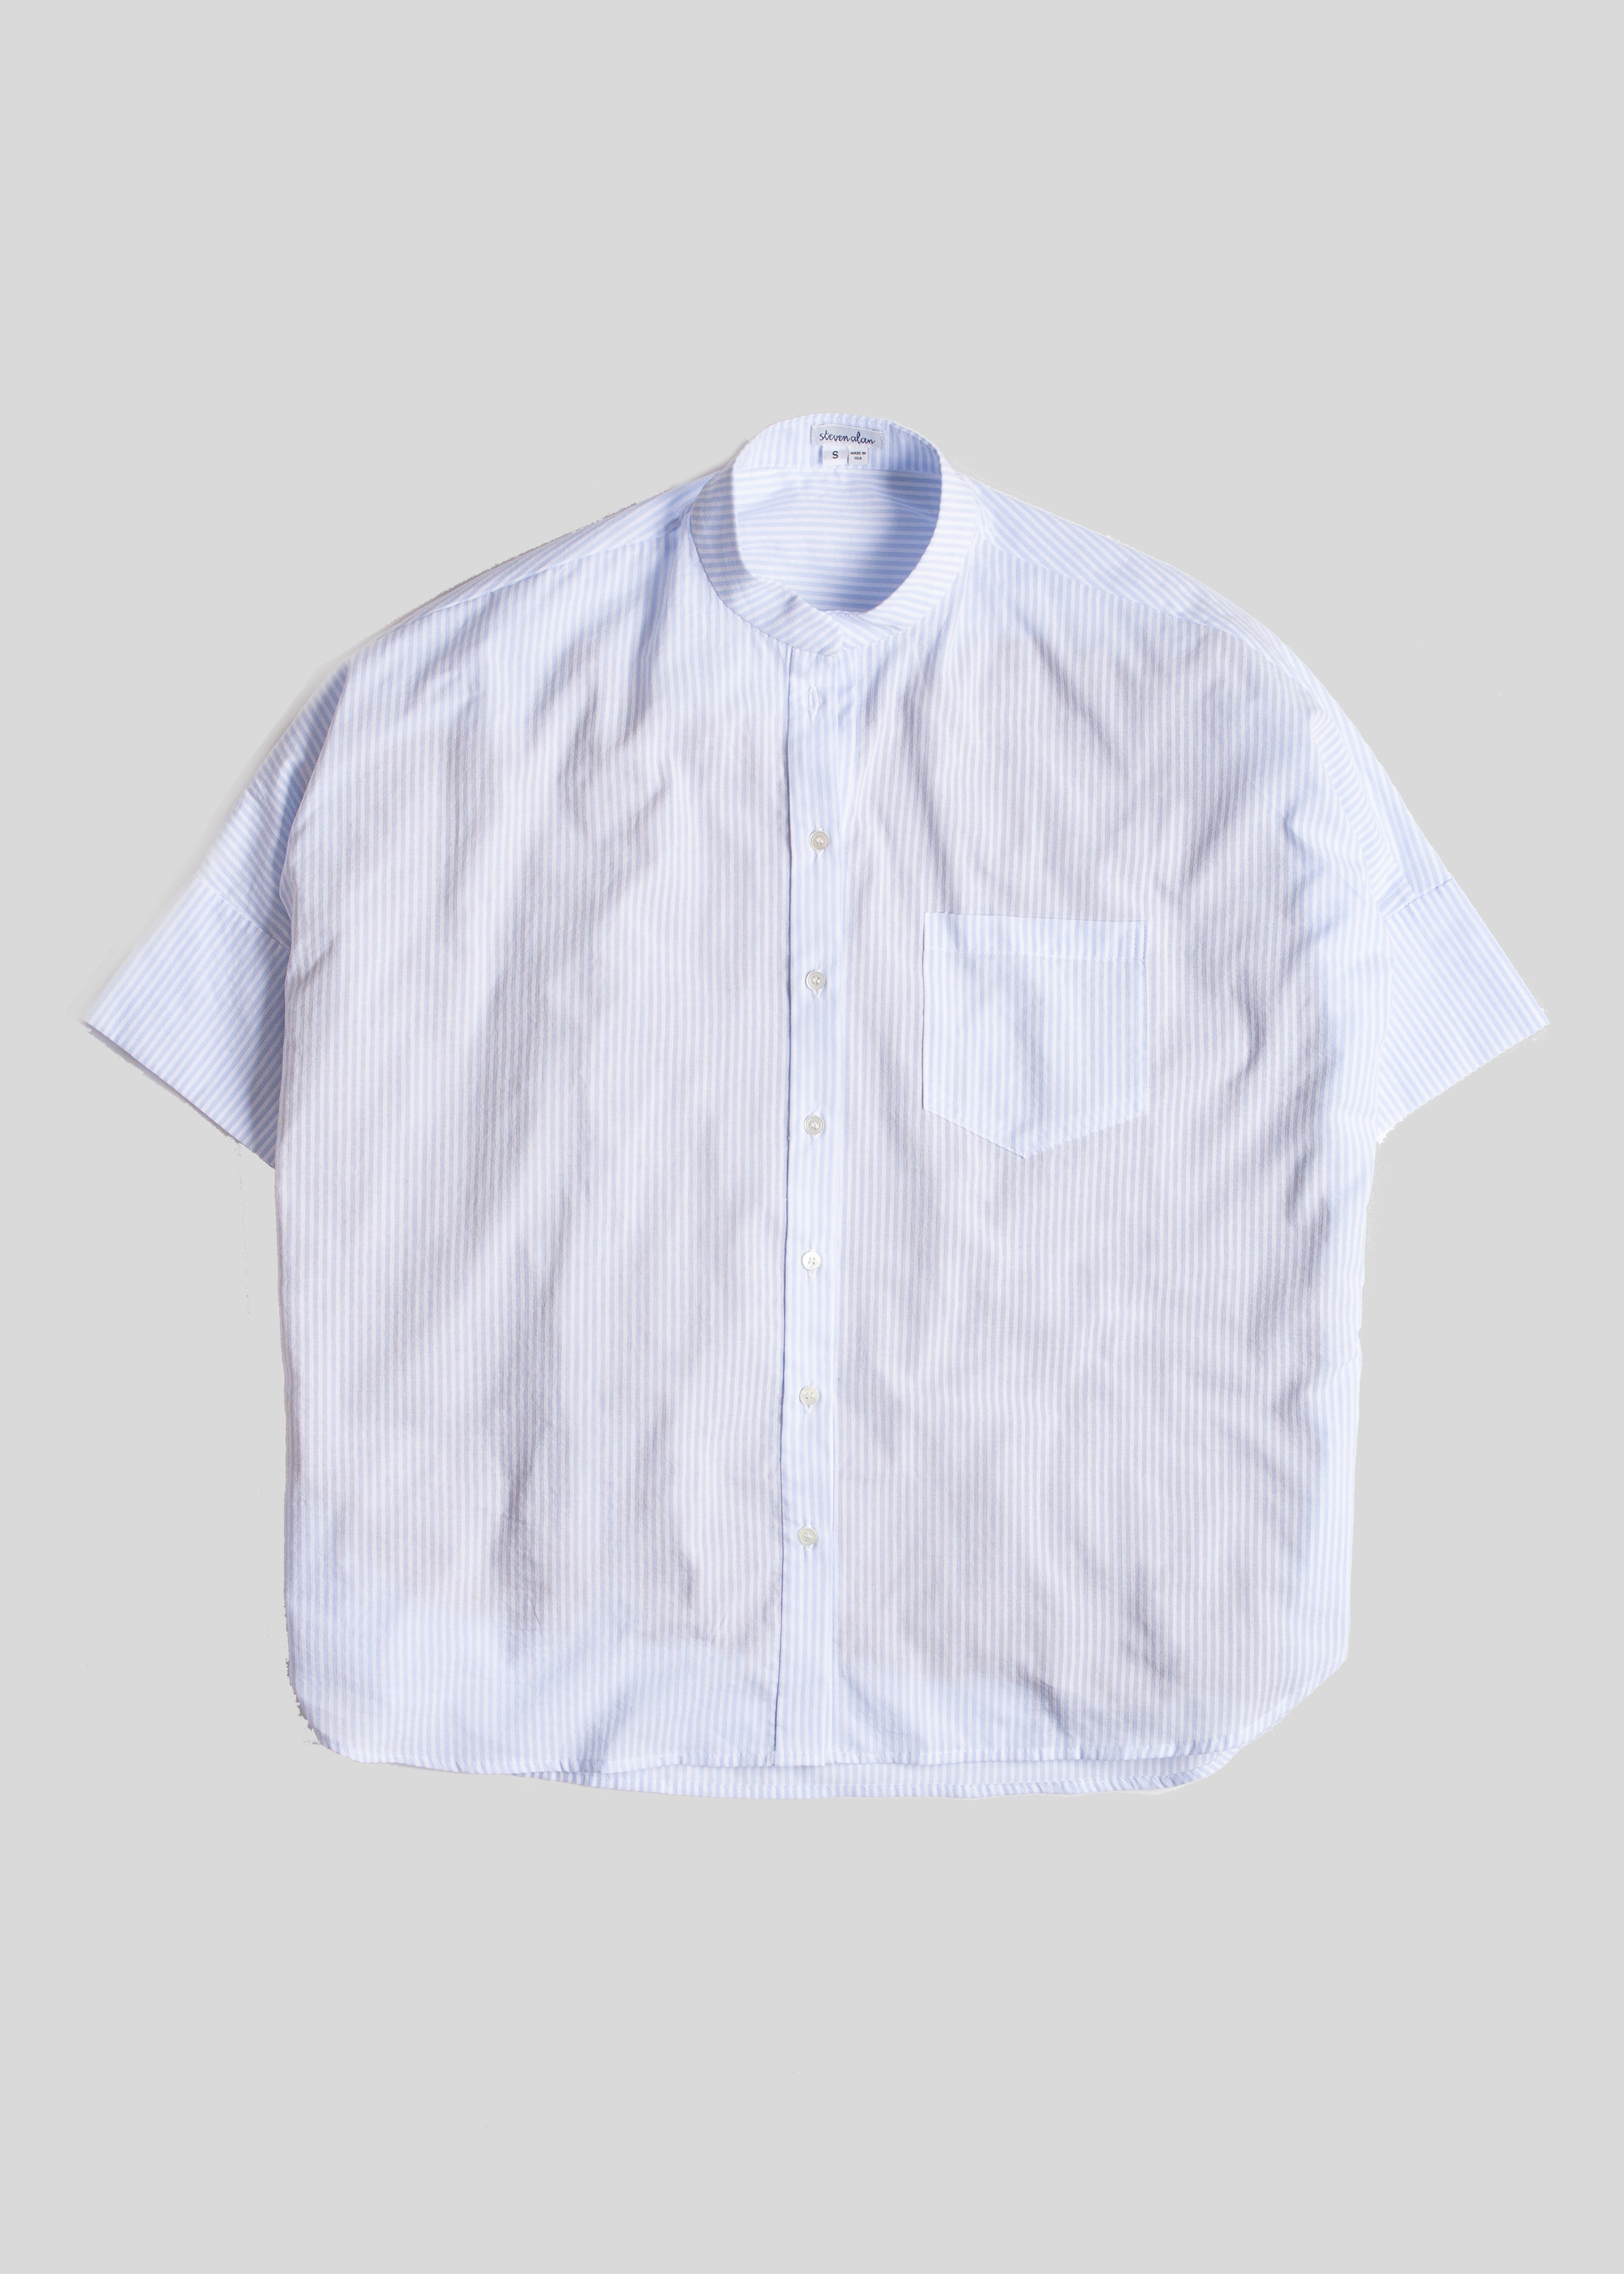 Oversized Stand Collar Shirt, Seersucker Stripe – Steven Alan